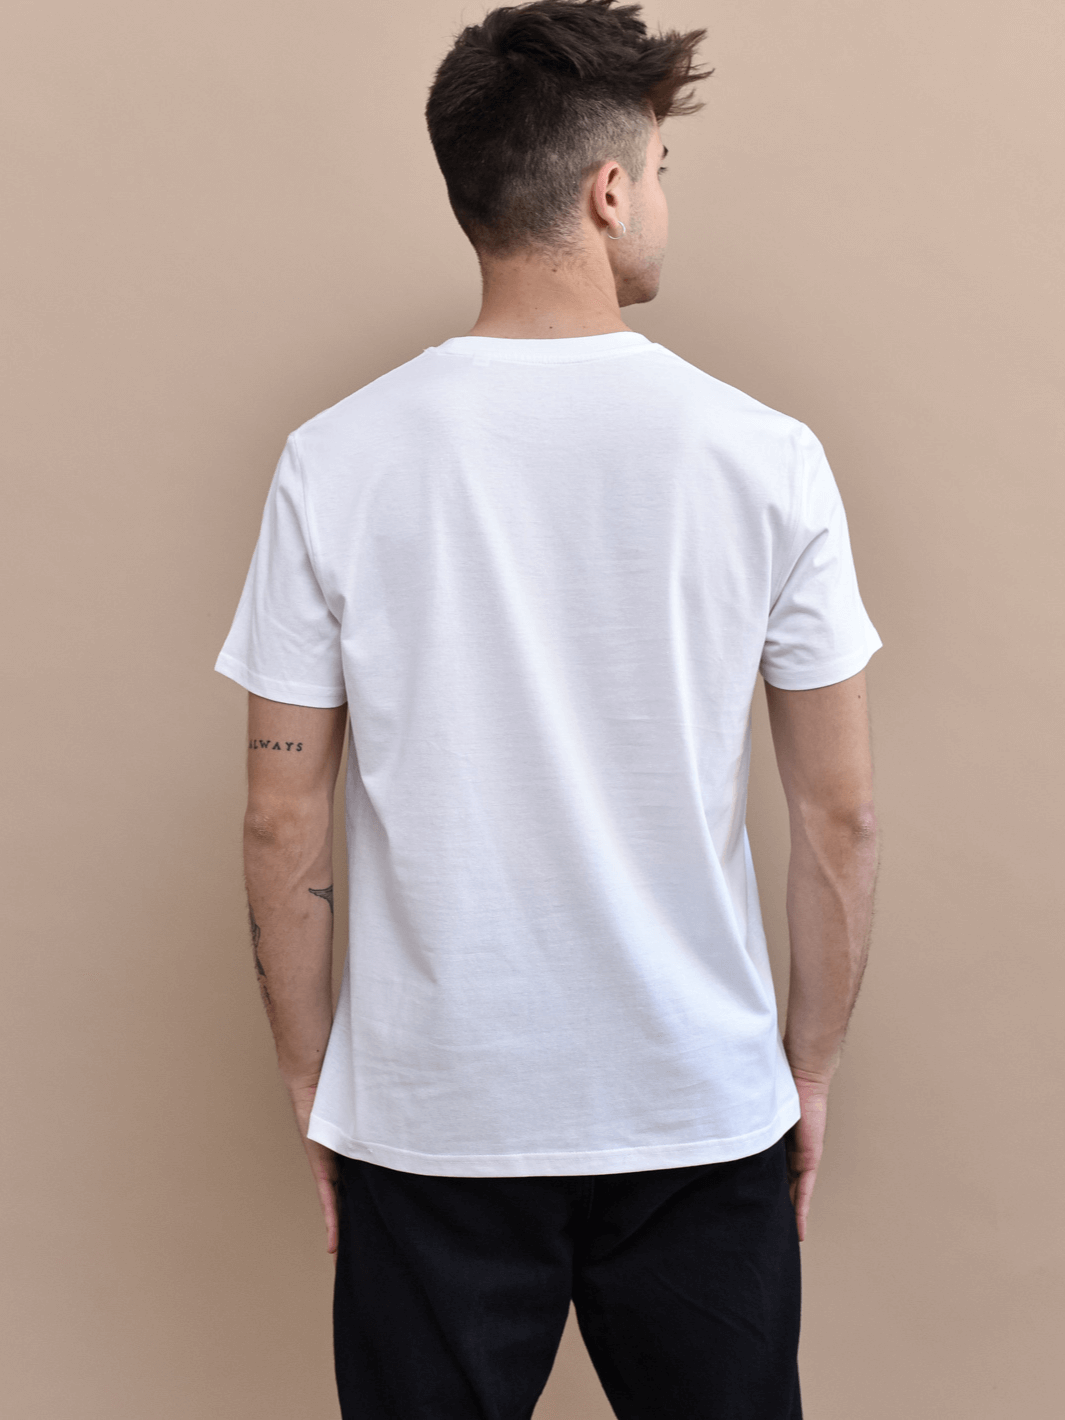 T-shirt essential bianca Limitlex stampa logo lato cuore.